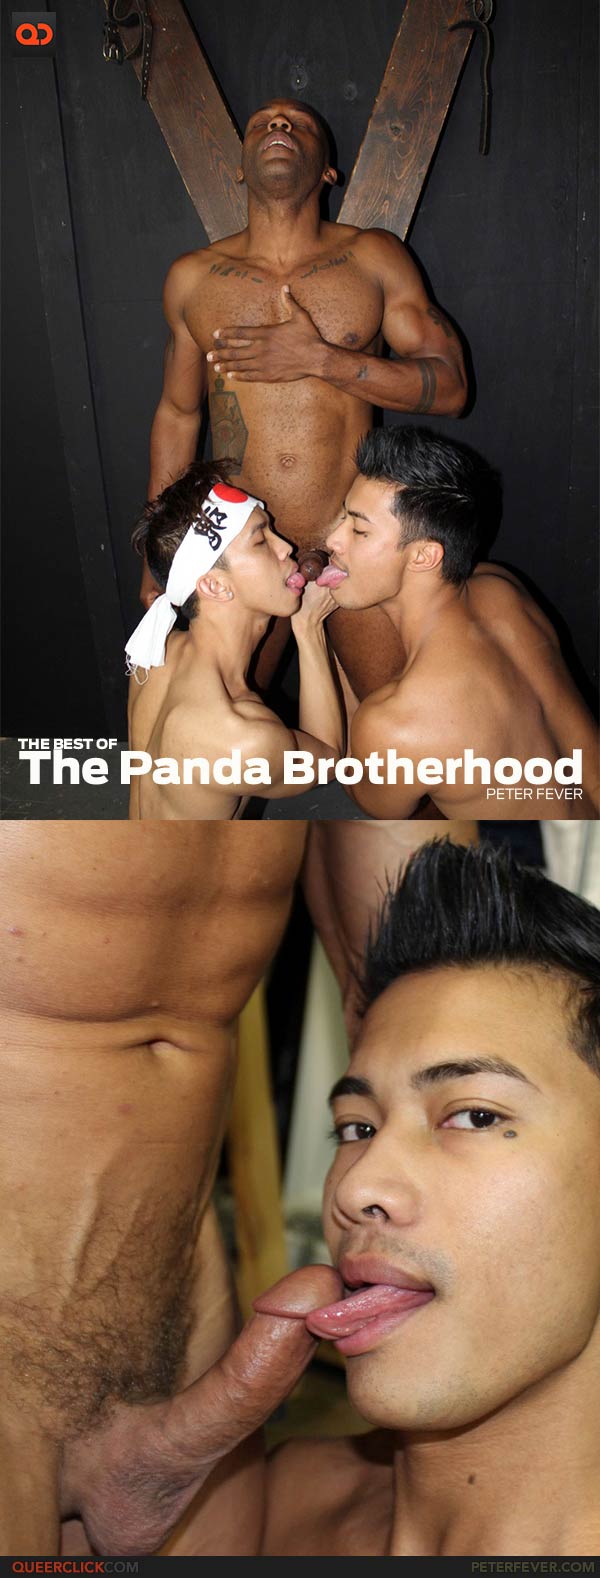 Peter Fever: Panda Brotherhood's Hottest Moments